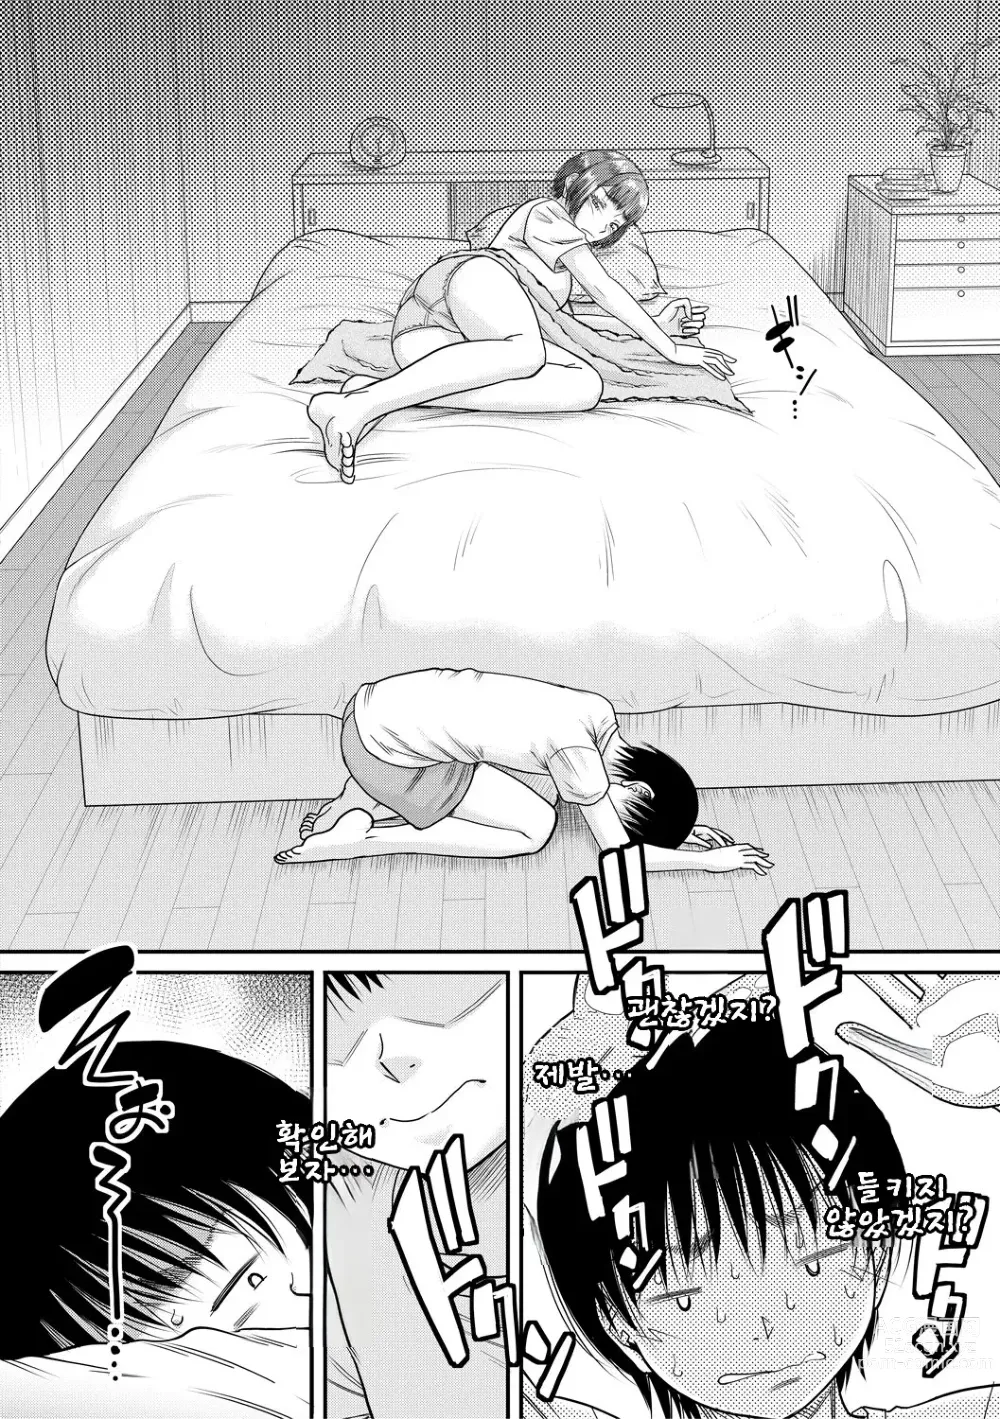 Page 12 of manga Boku to Okaa-san no Himitsu no Kankei l 나와 의붓 엄마의 비밀 관계